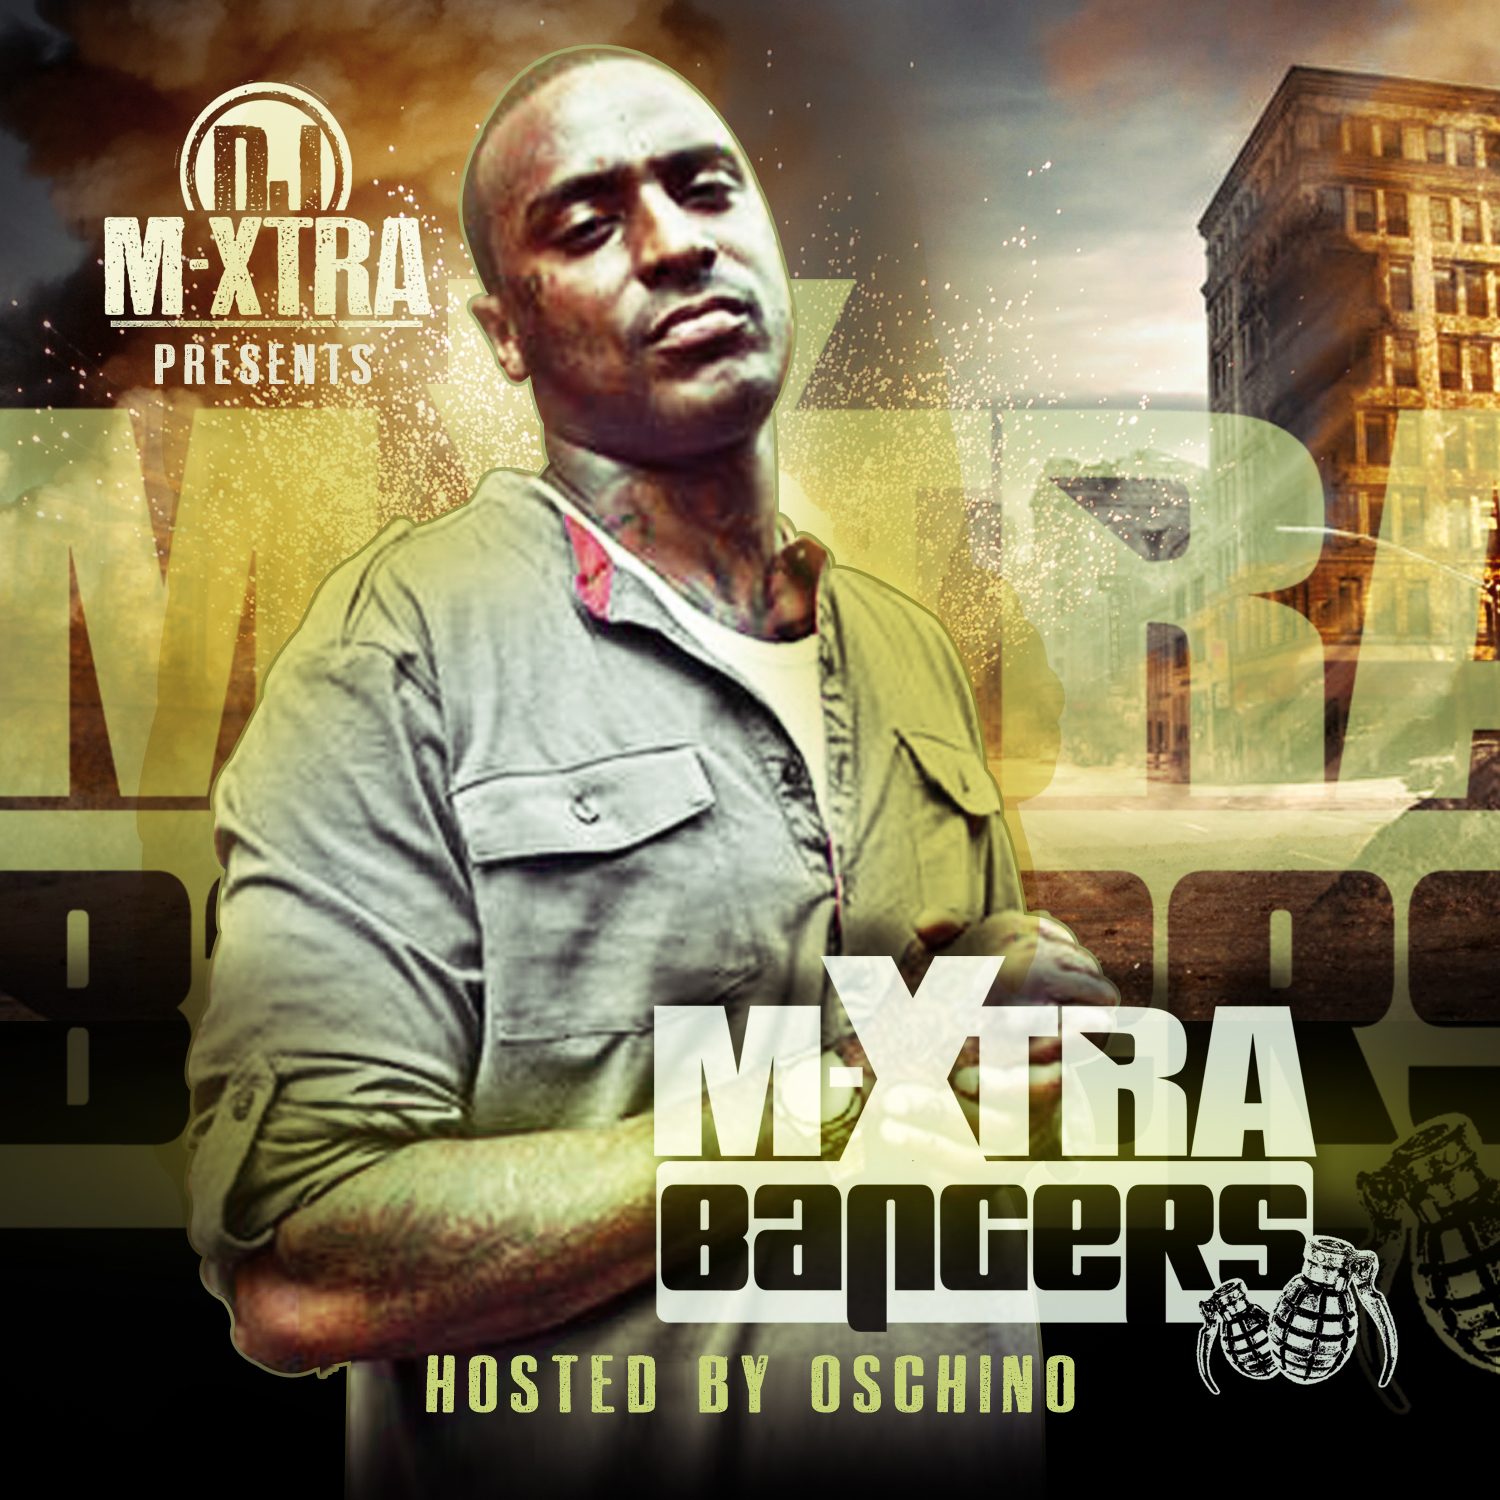 xtra-bang @DJMxtra - Bangers Vol 1 Hosted By @Oschino_Vasquez (Mixtape)  